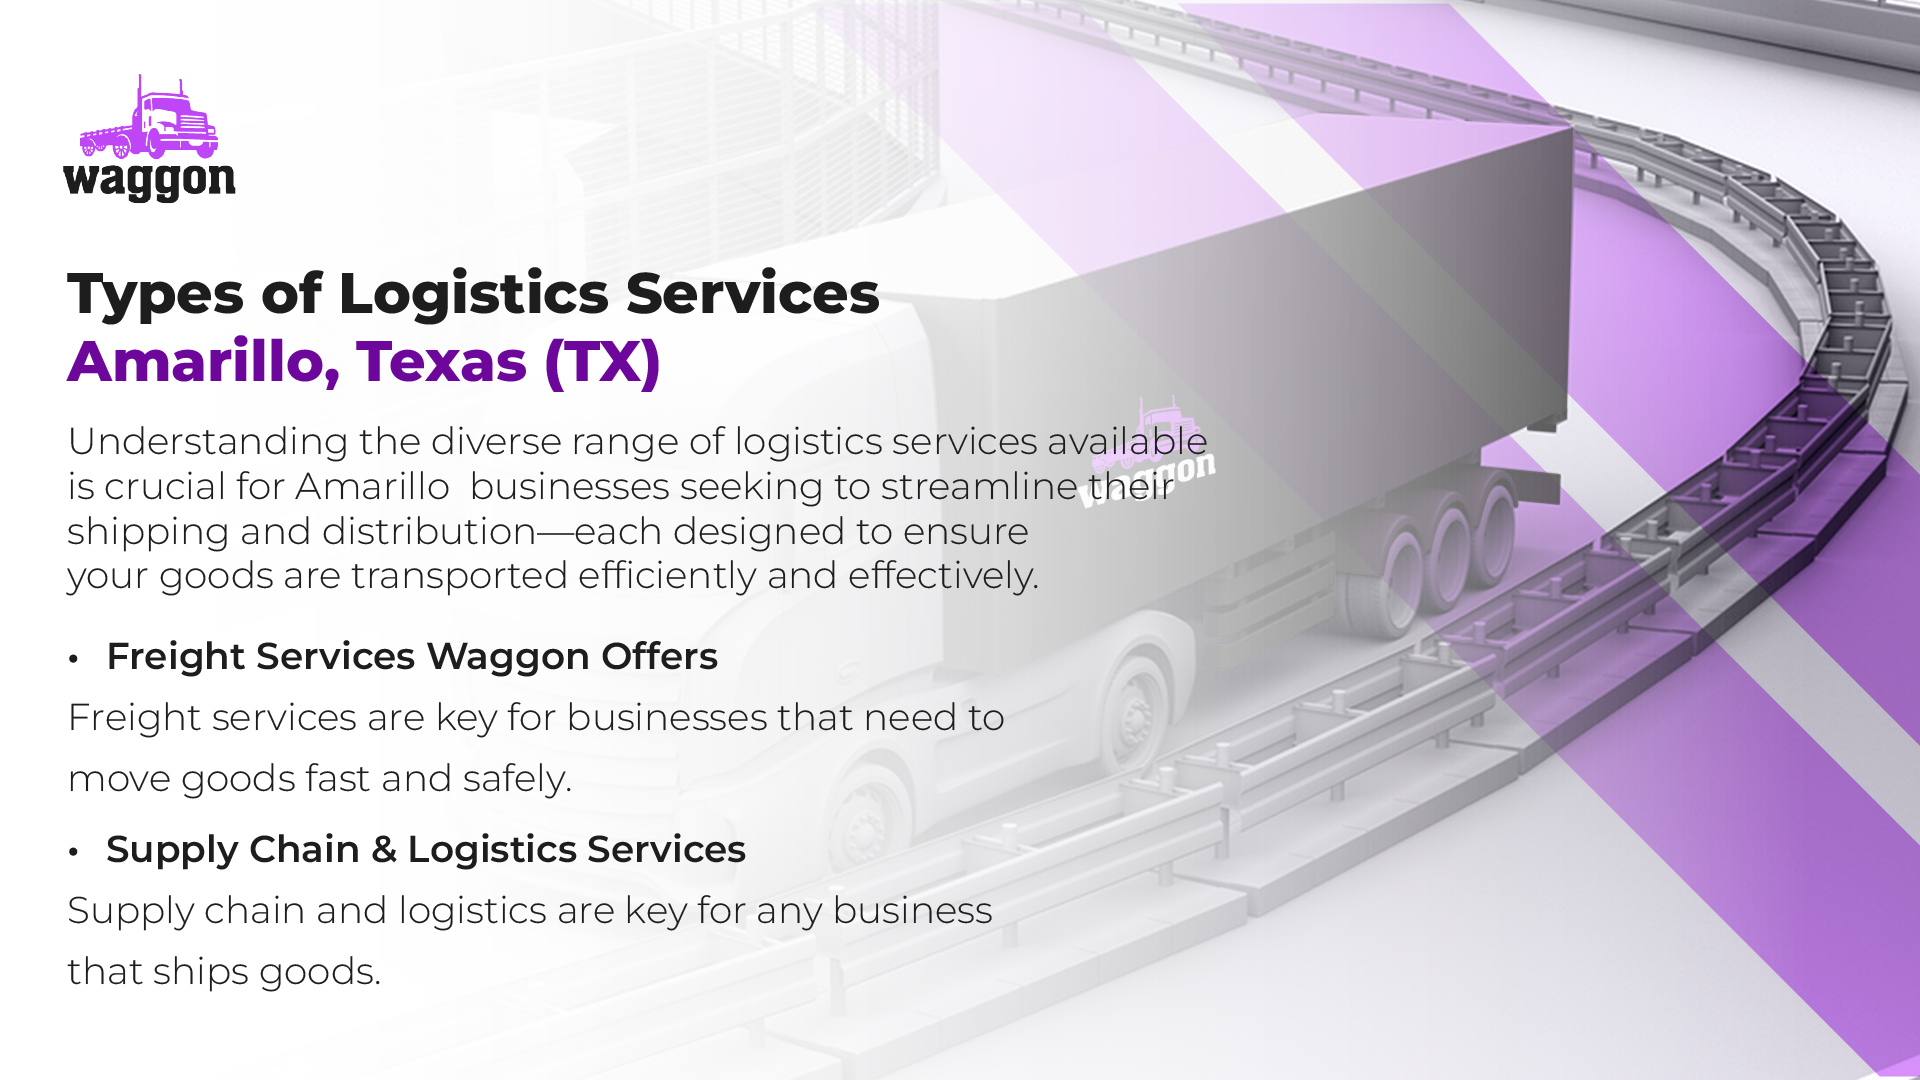 Types of Logistics Services in Amarillo, Texas (TX)